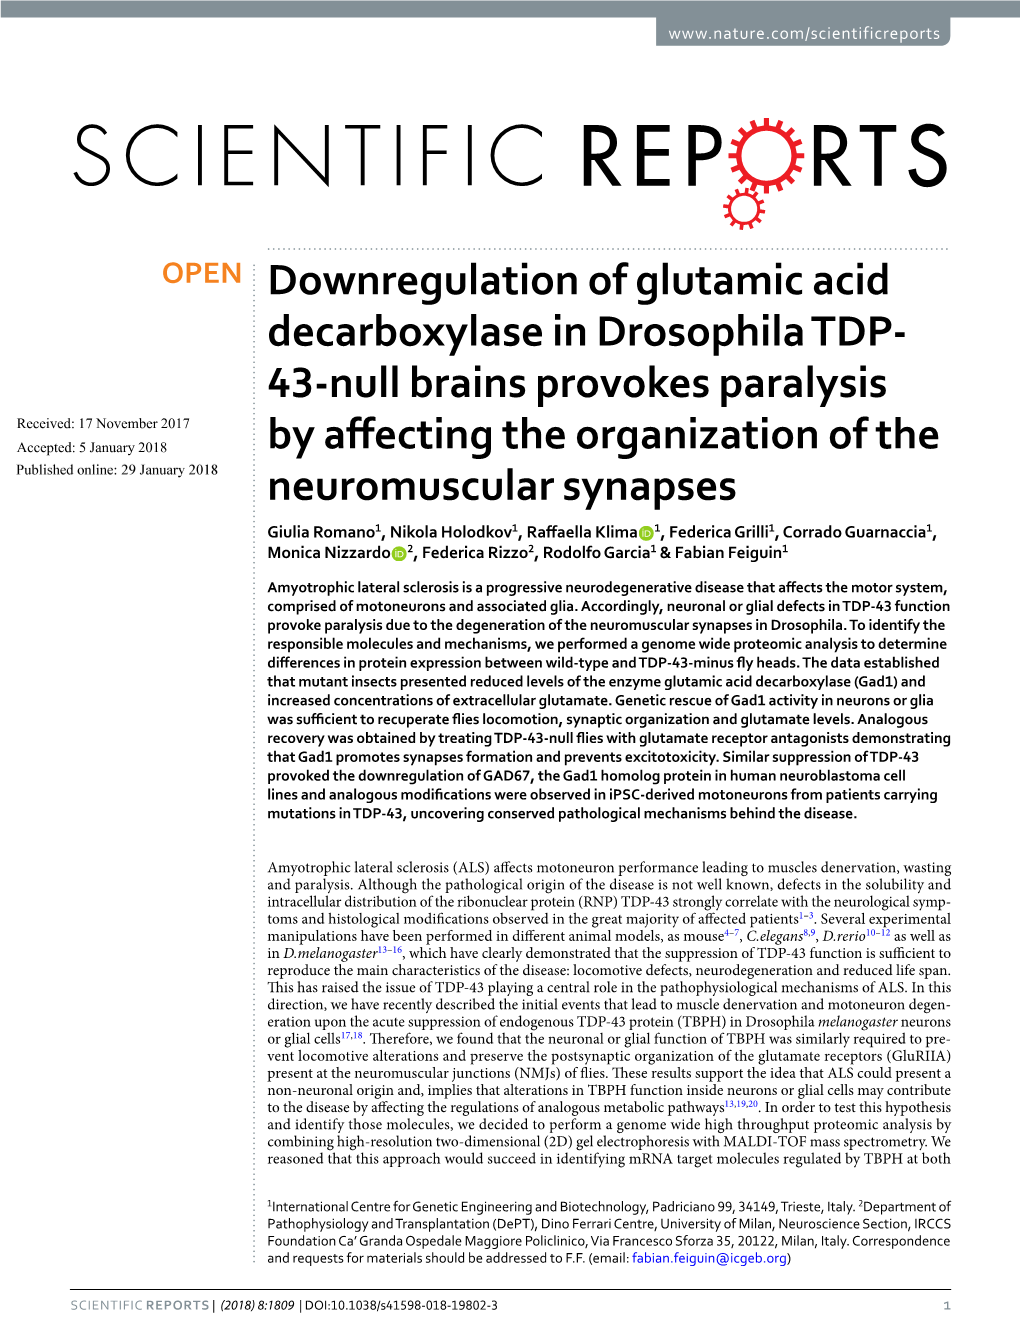 Downregulation of Glutamic Acid Decarboxylase in Drosophila TDP